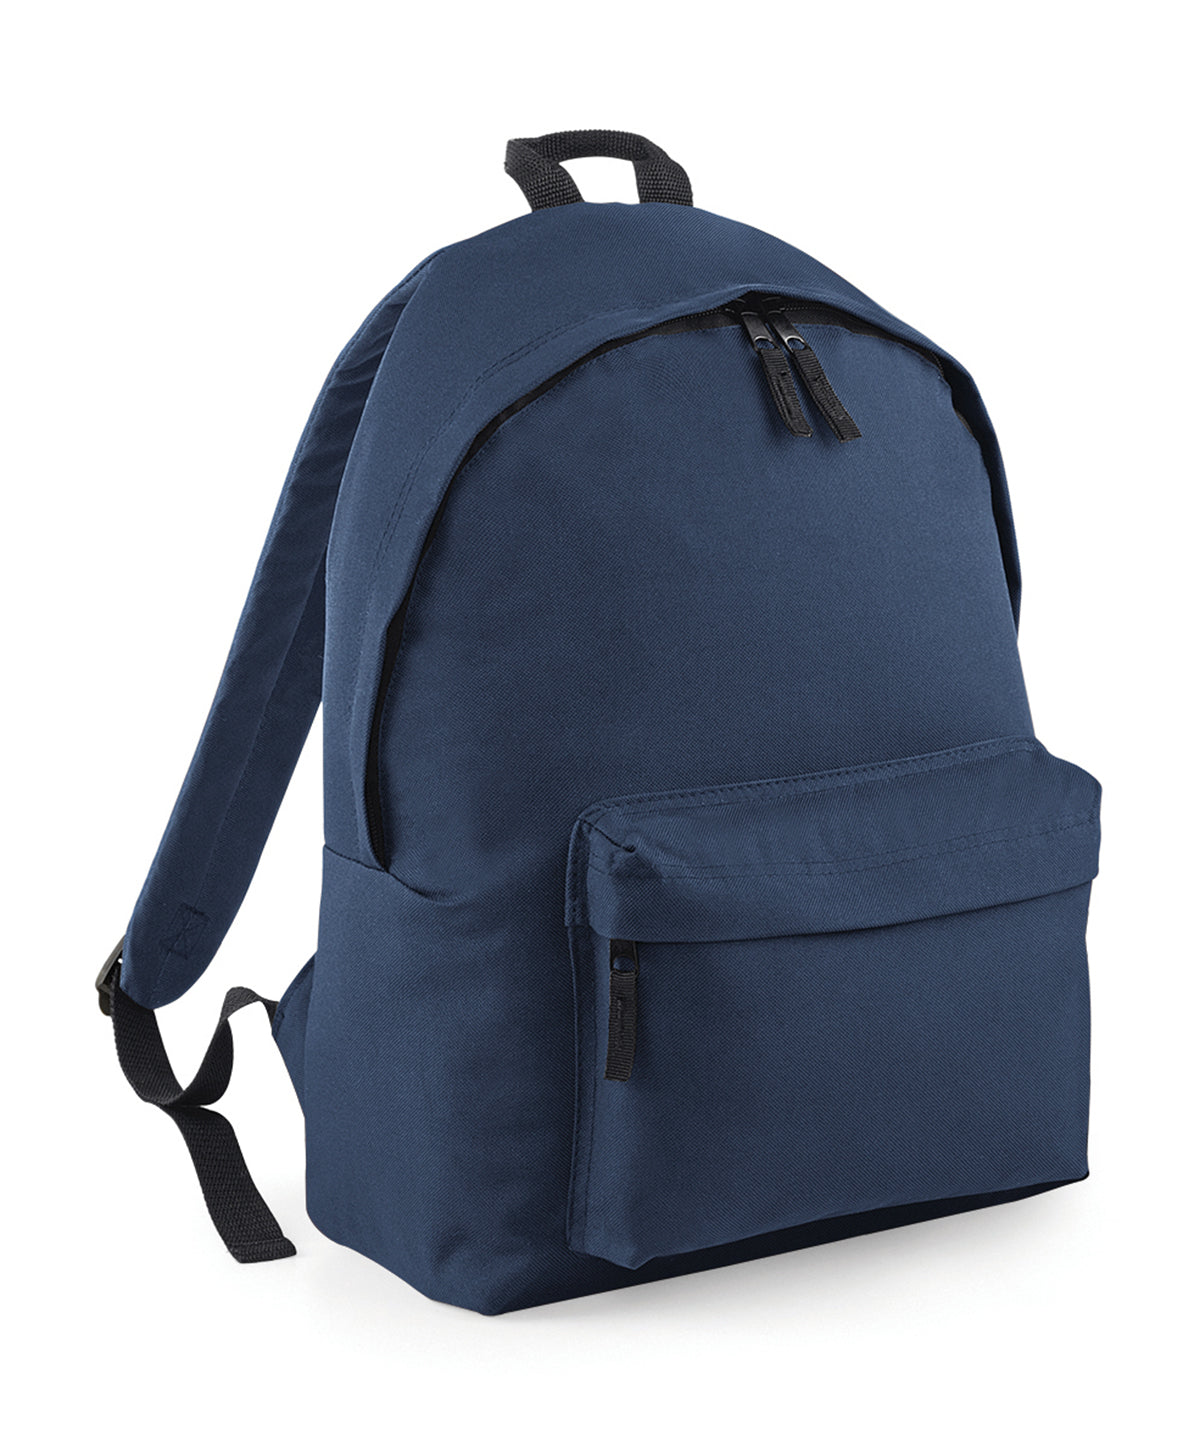 Personalised Bags - Navy Bagbase Original fashion backpack